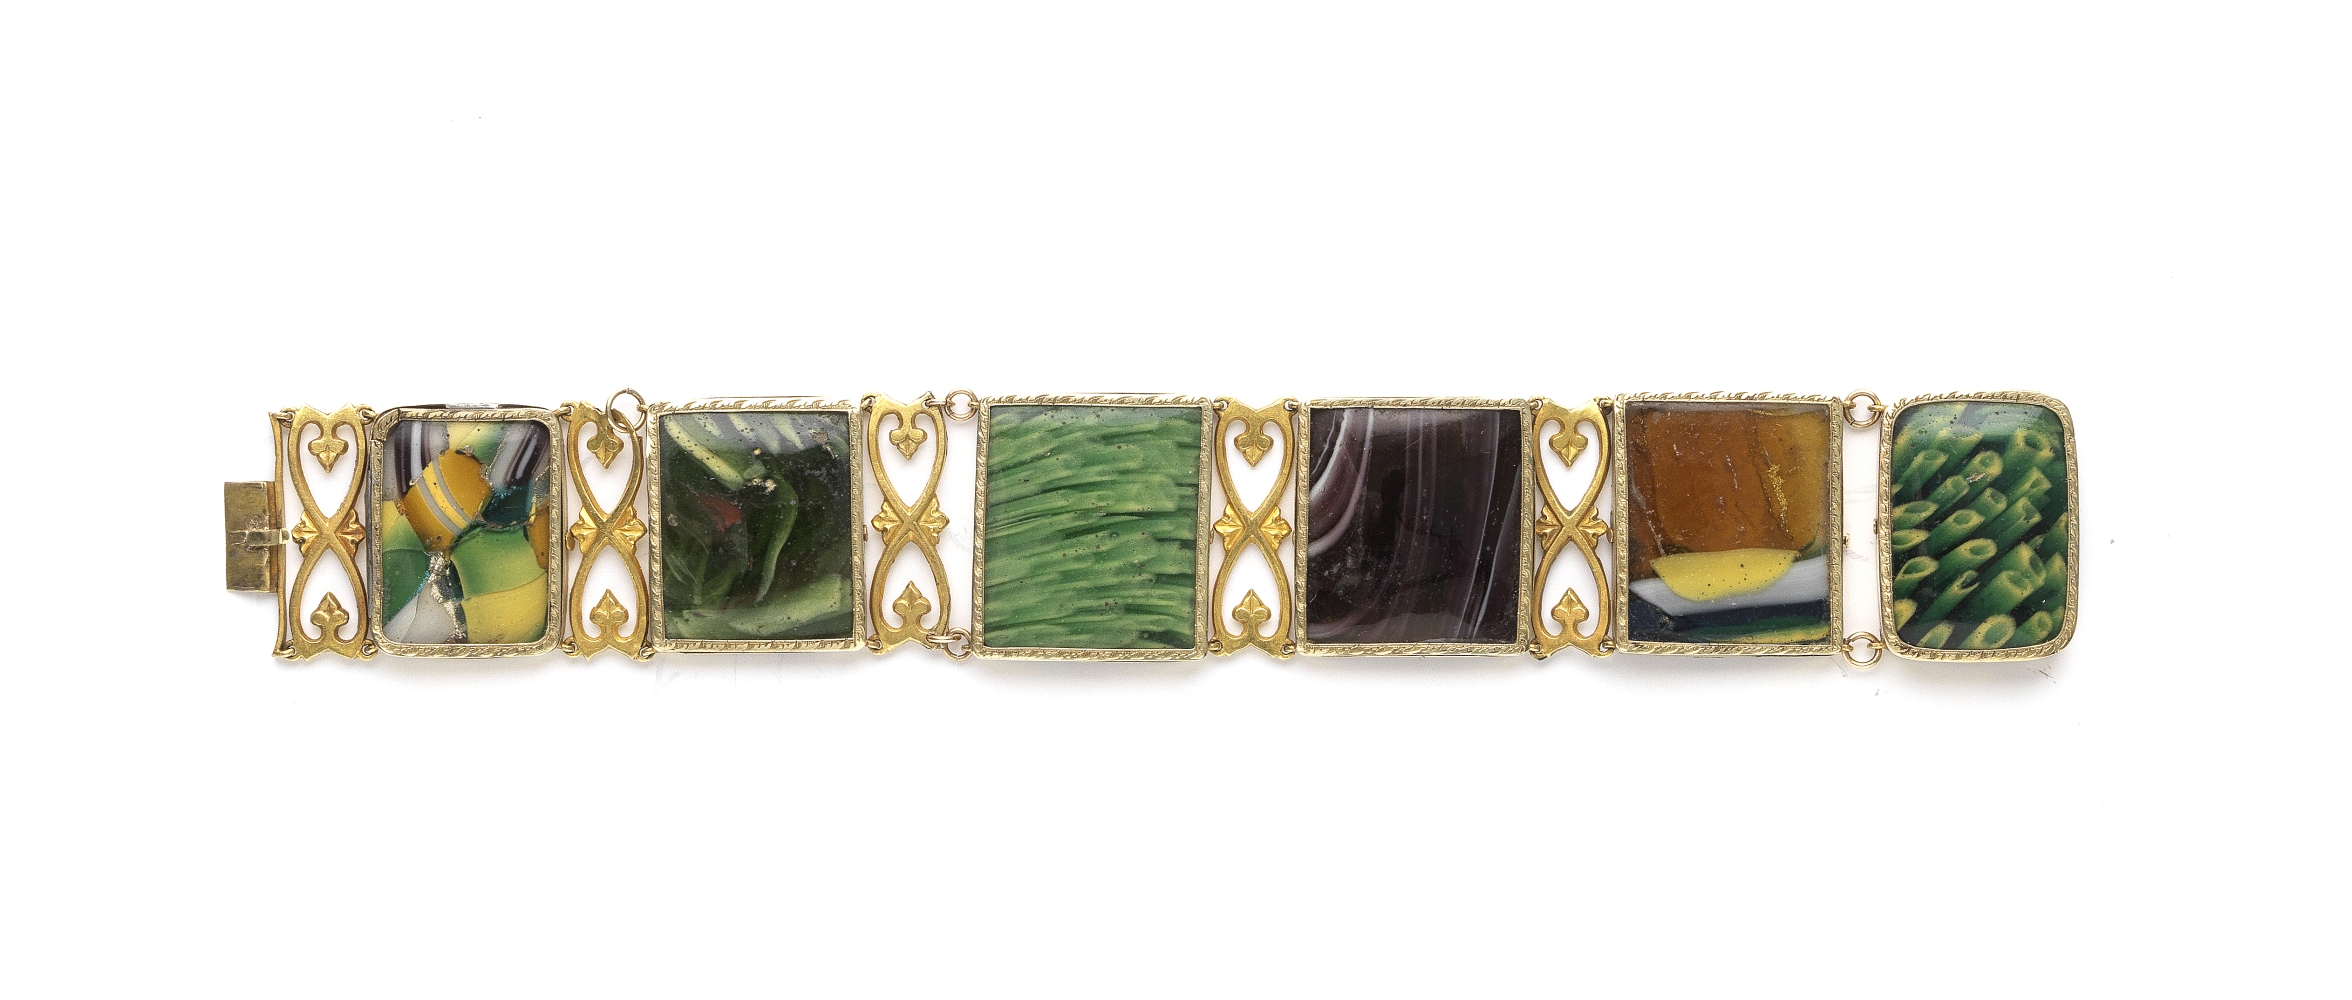 Roman mosaic glass panels set into a 19th Century bracelet